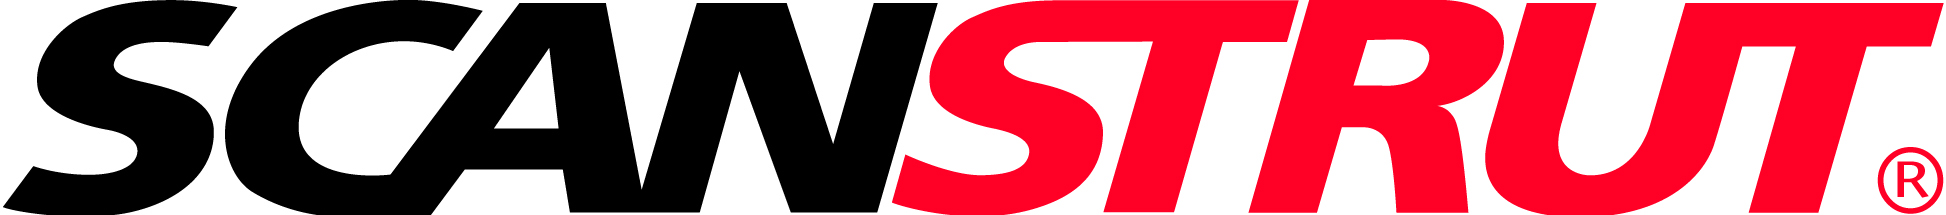 Scanstrut logo